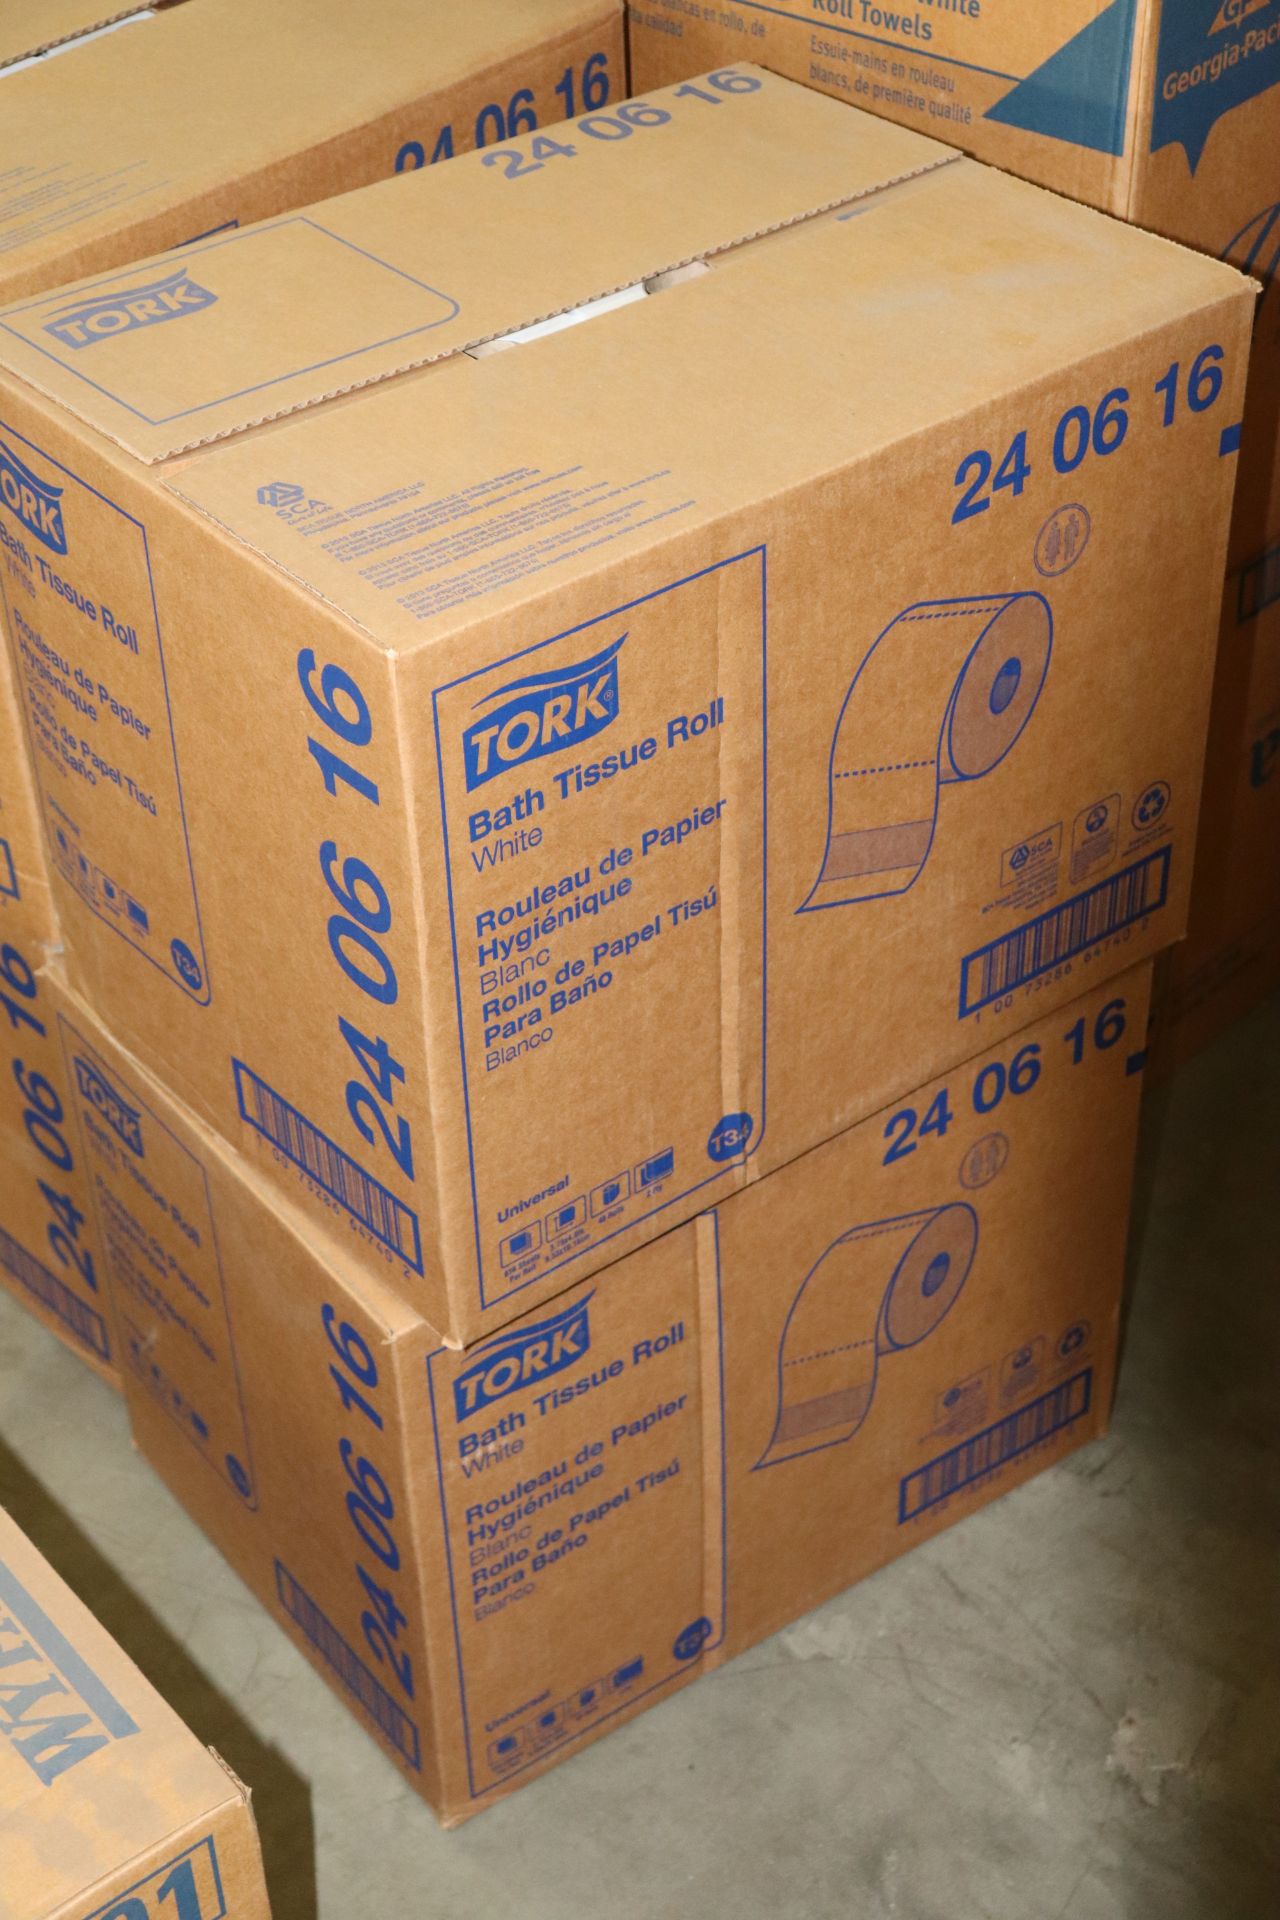 Two cartons of Tork bath tissue roll, 48 rolls per box